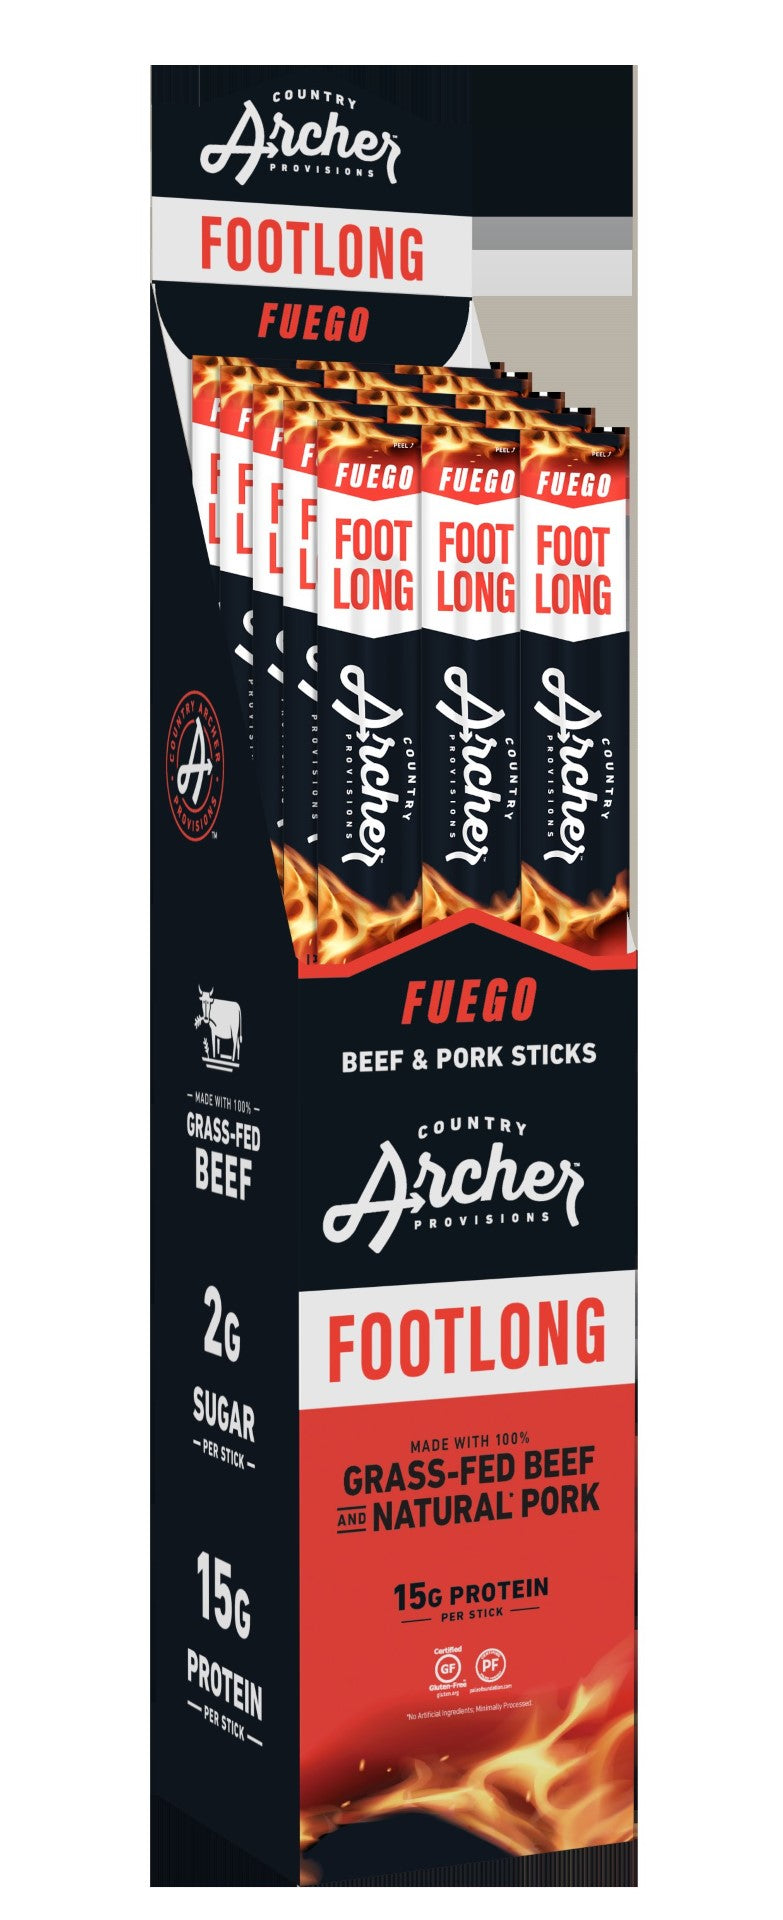 Country Archer Jerky Co Fuego Footlong 1.8 Ounce Size - 108 Per Case.